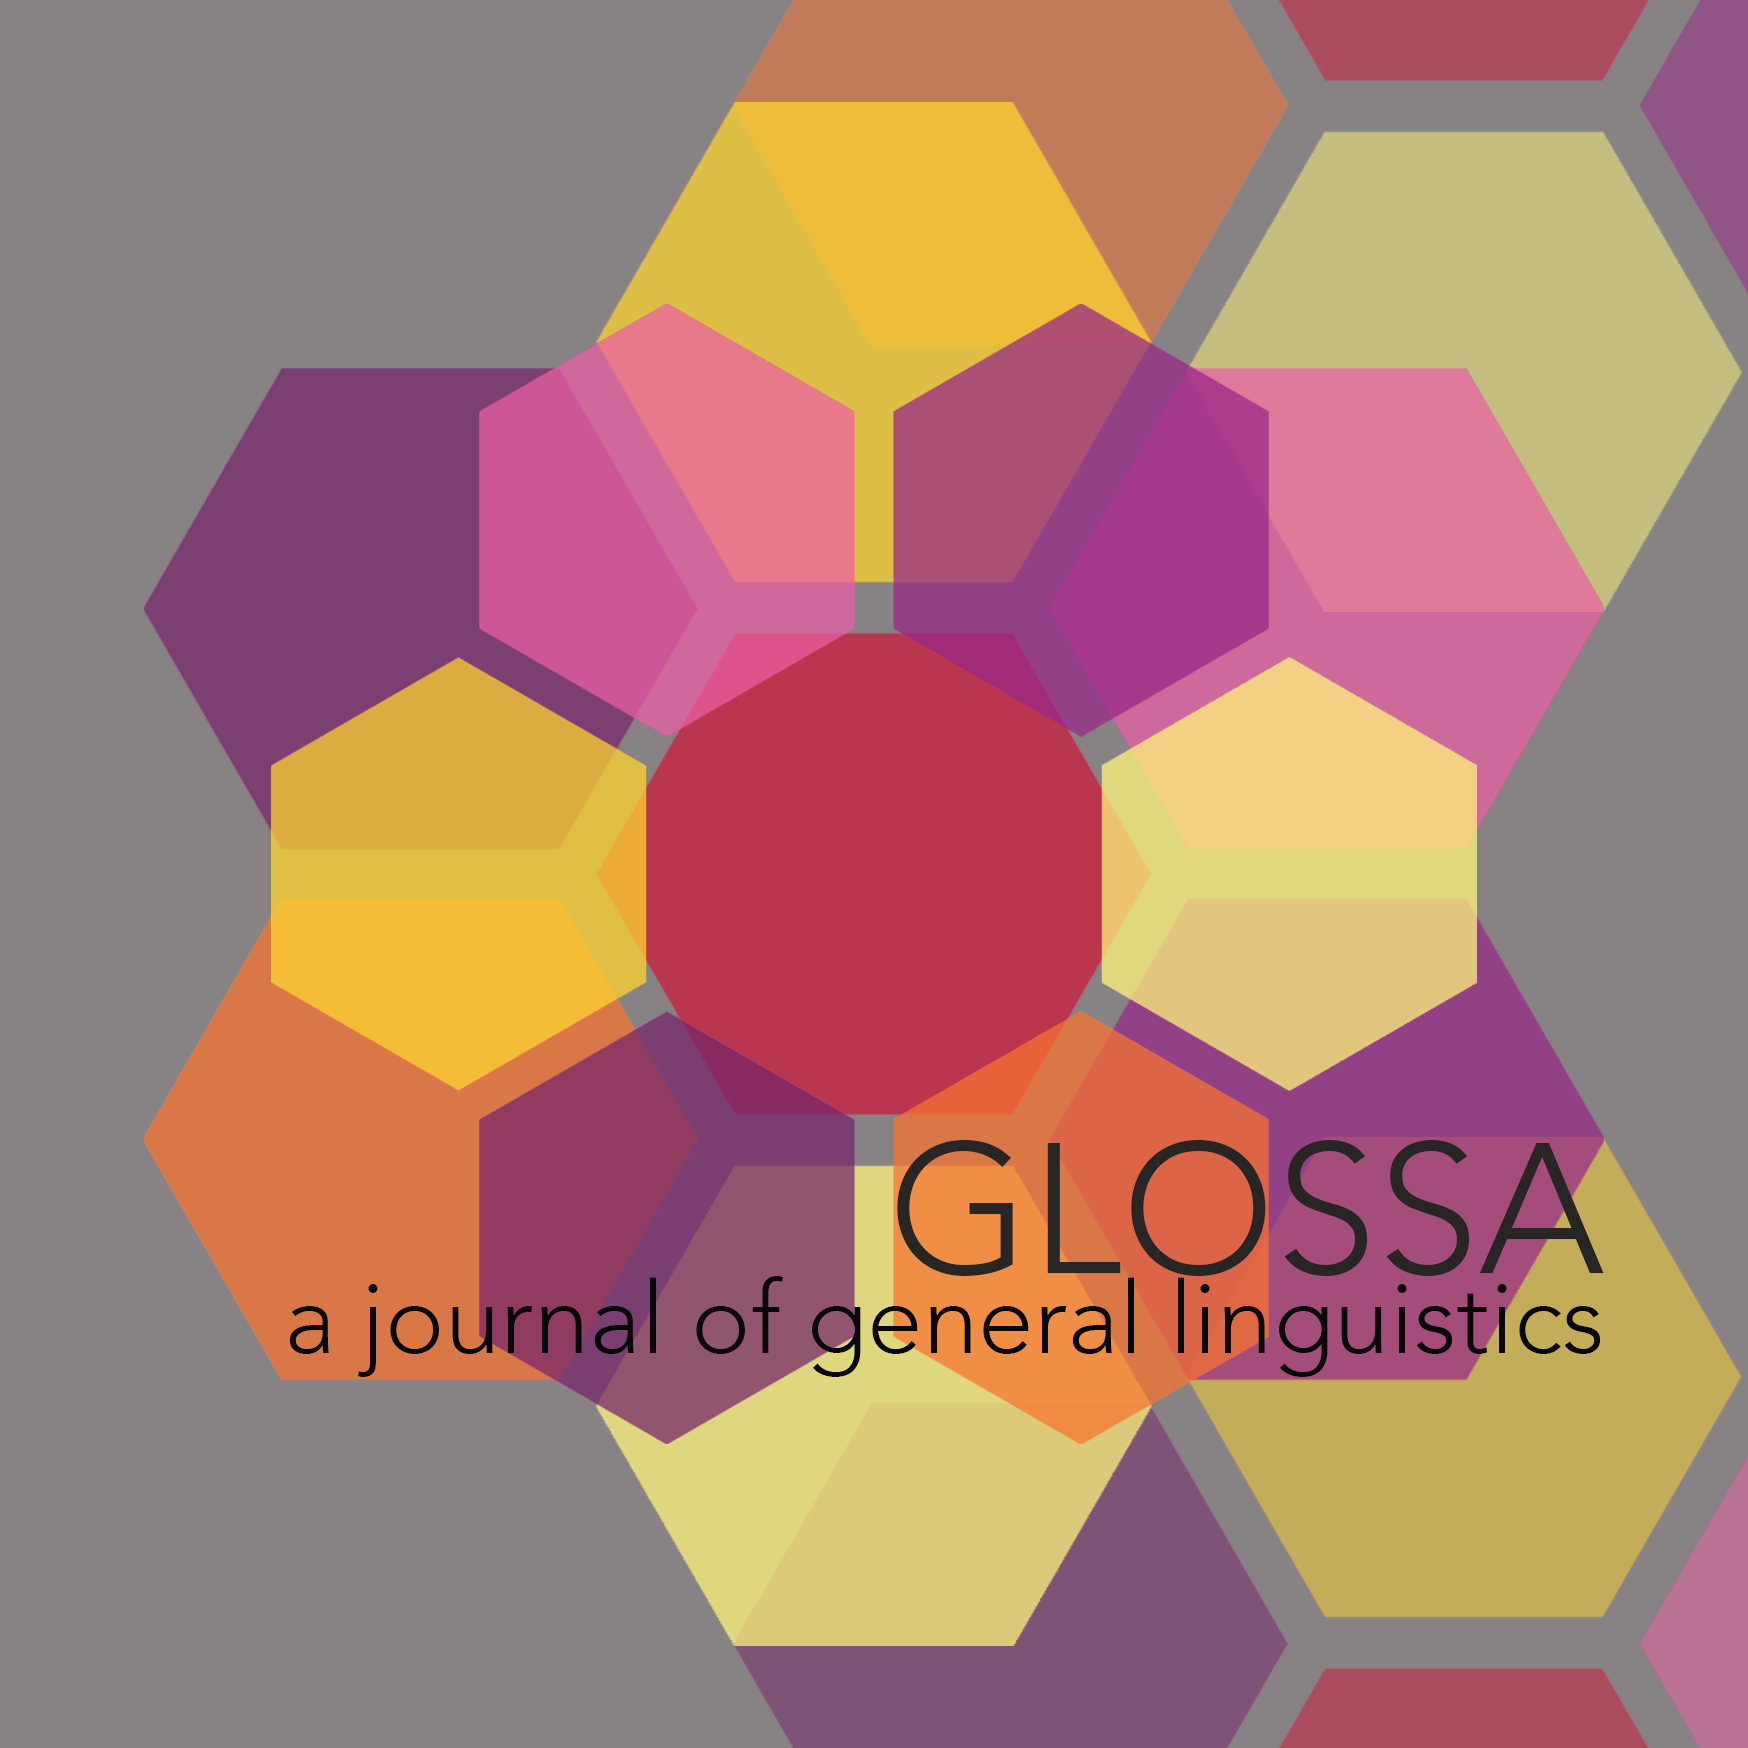 Glossa: a journal of general linguistics